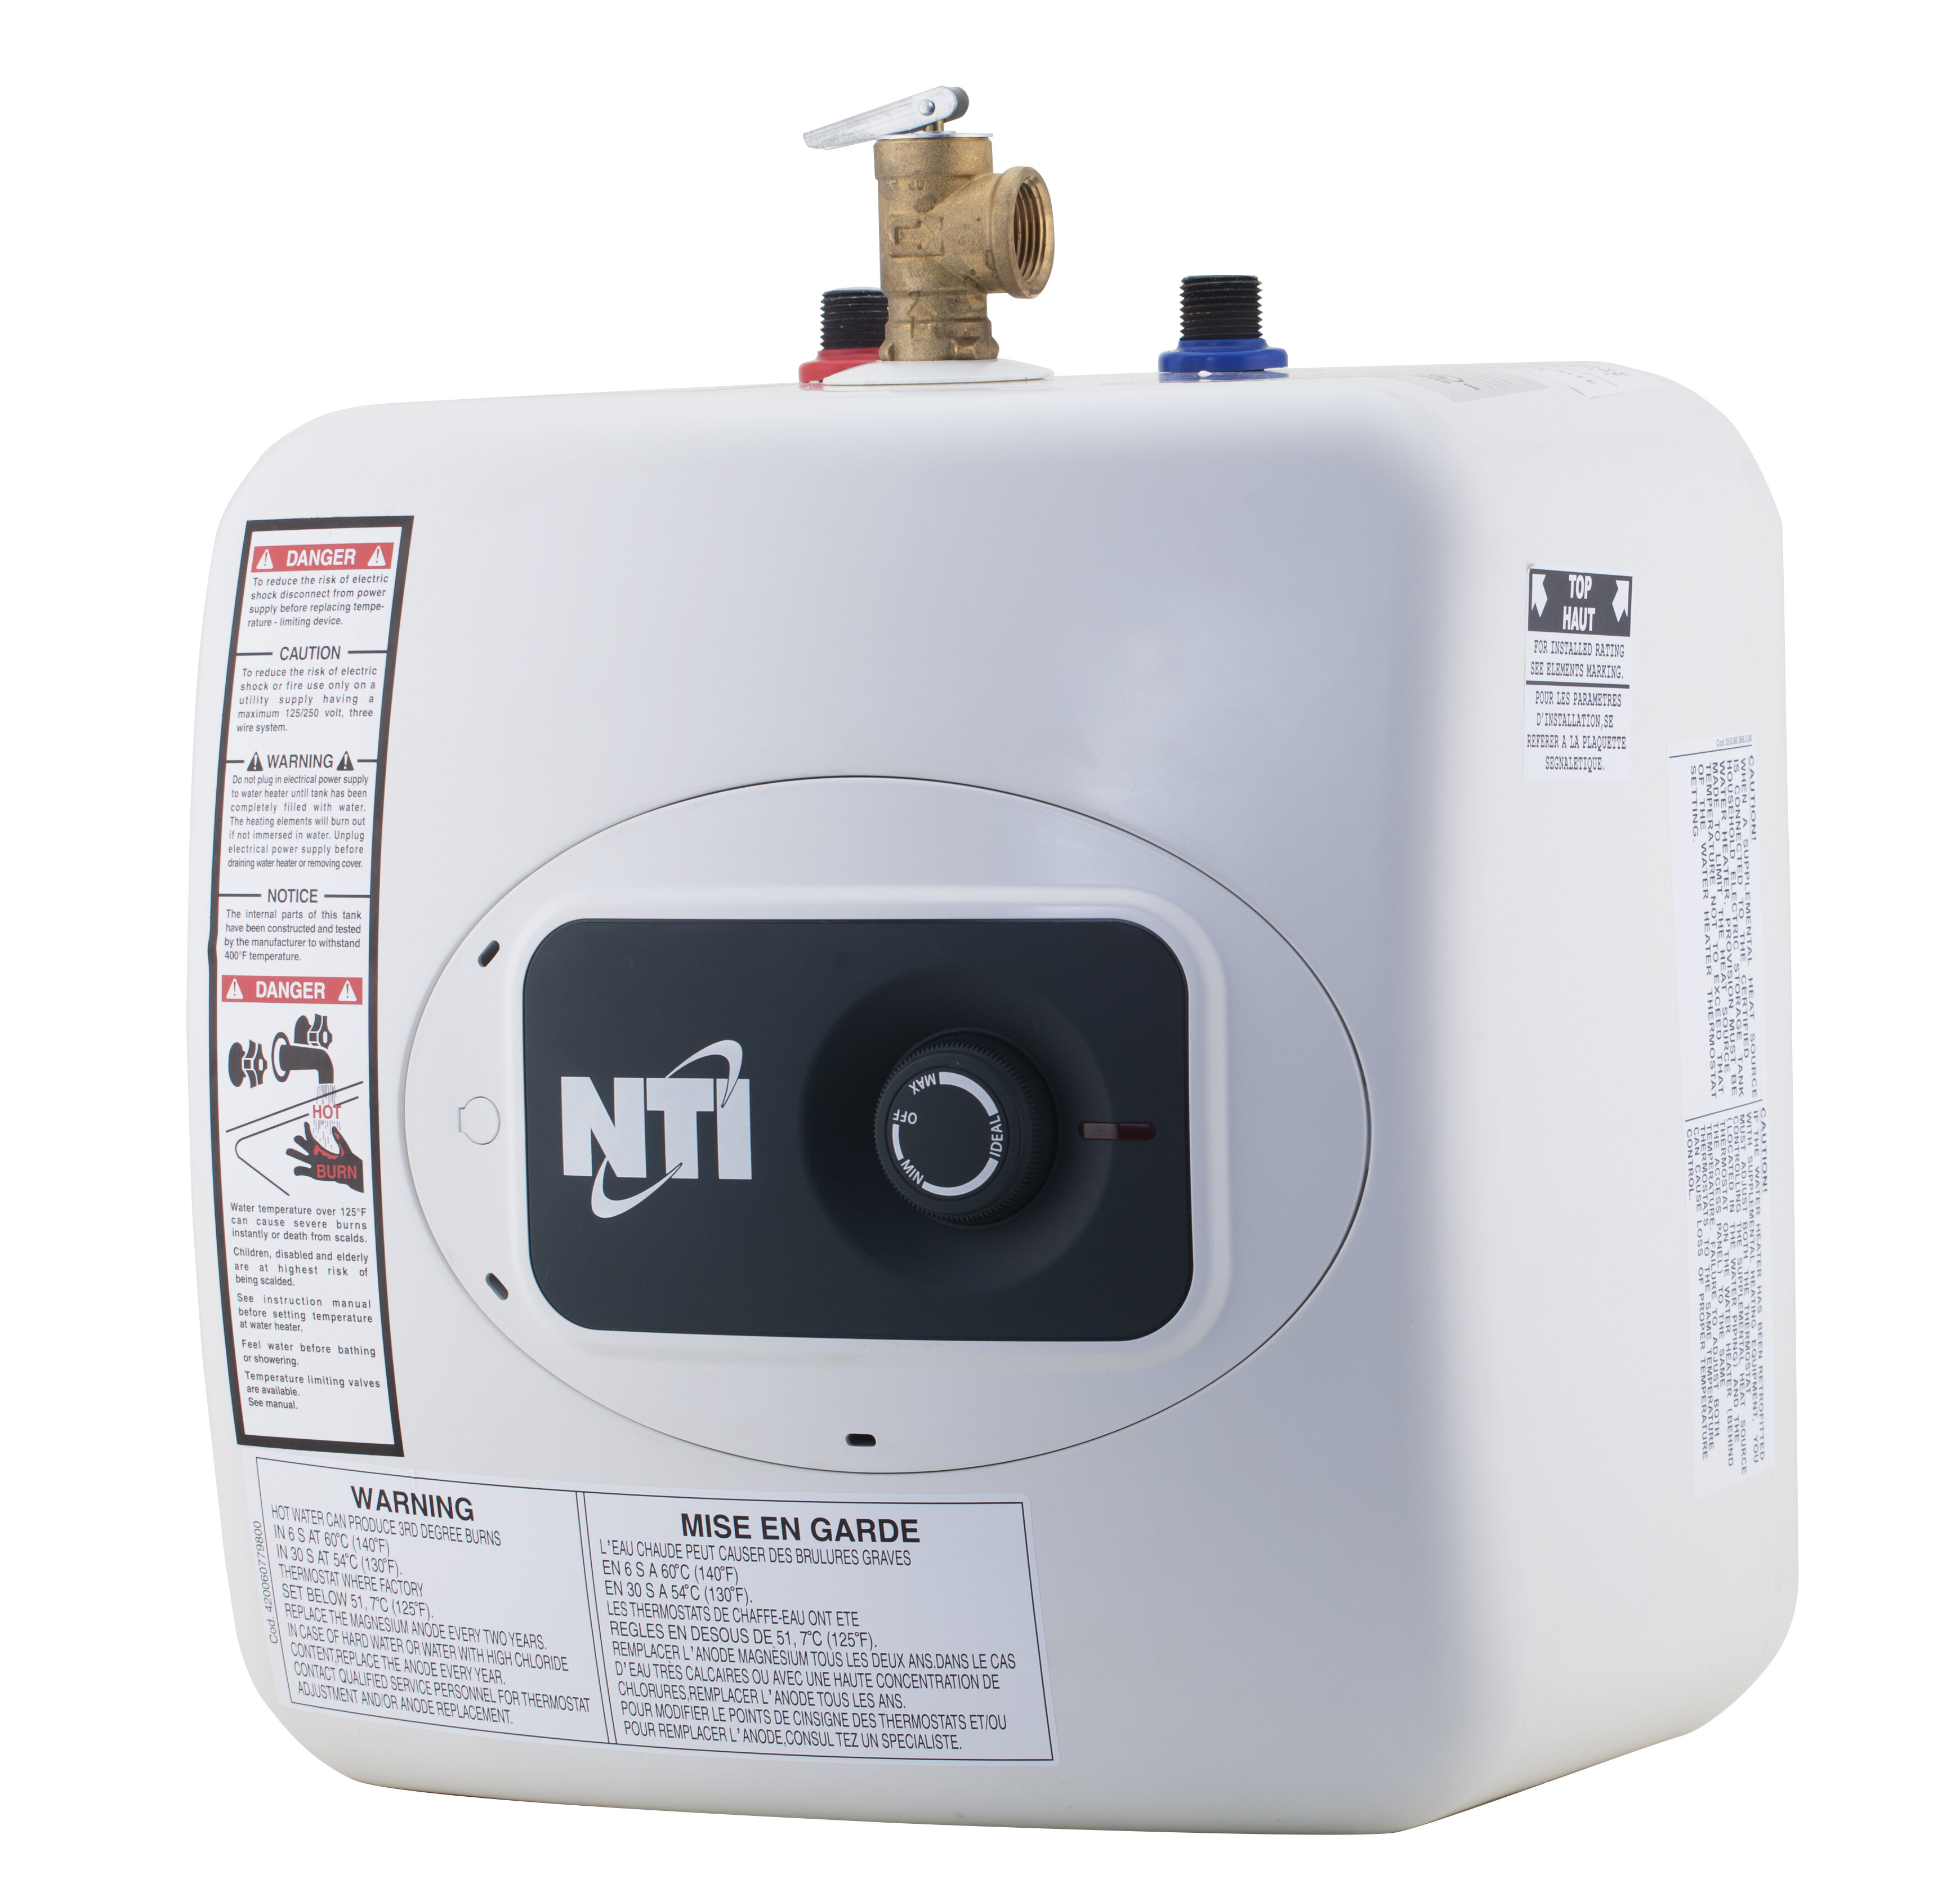 Nti Tank 4 Gallon Electric Point Of Use Water Heater Wayfair Ca